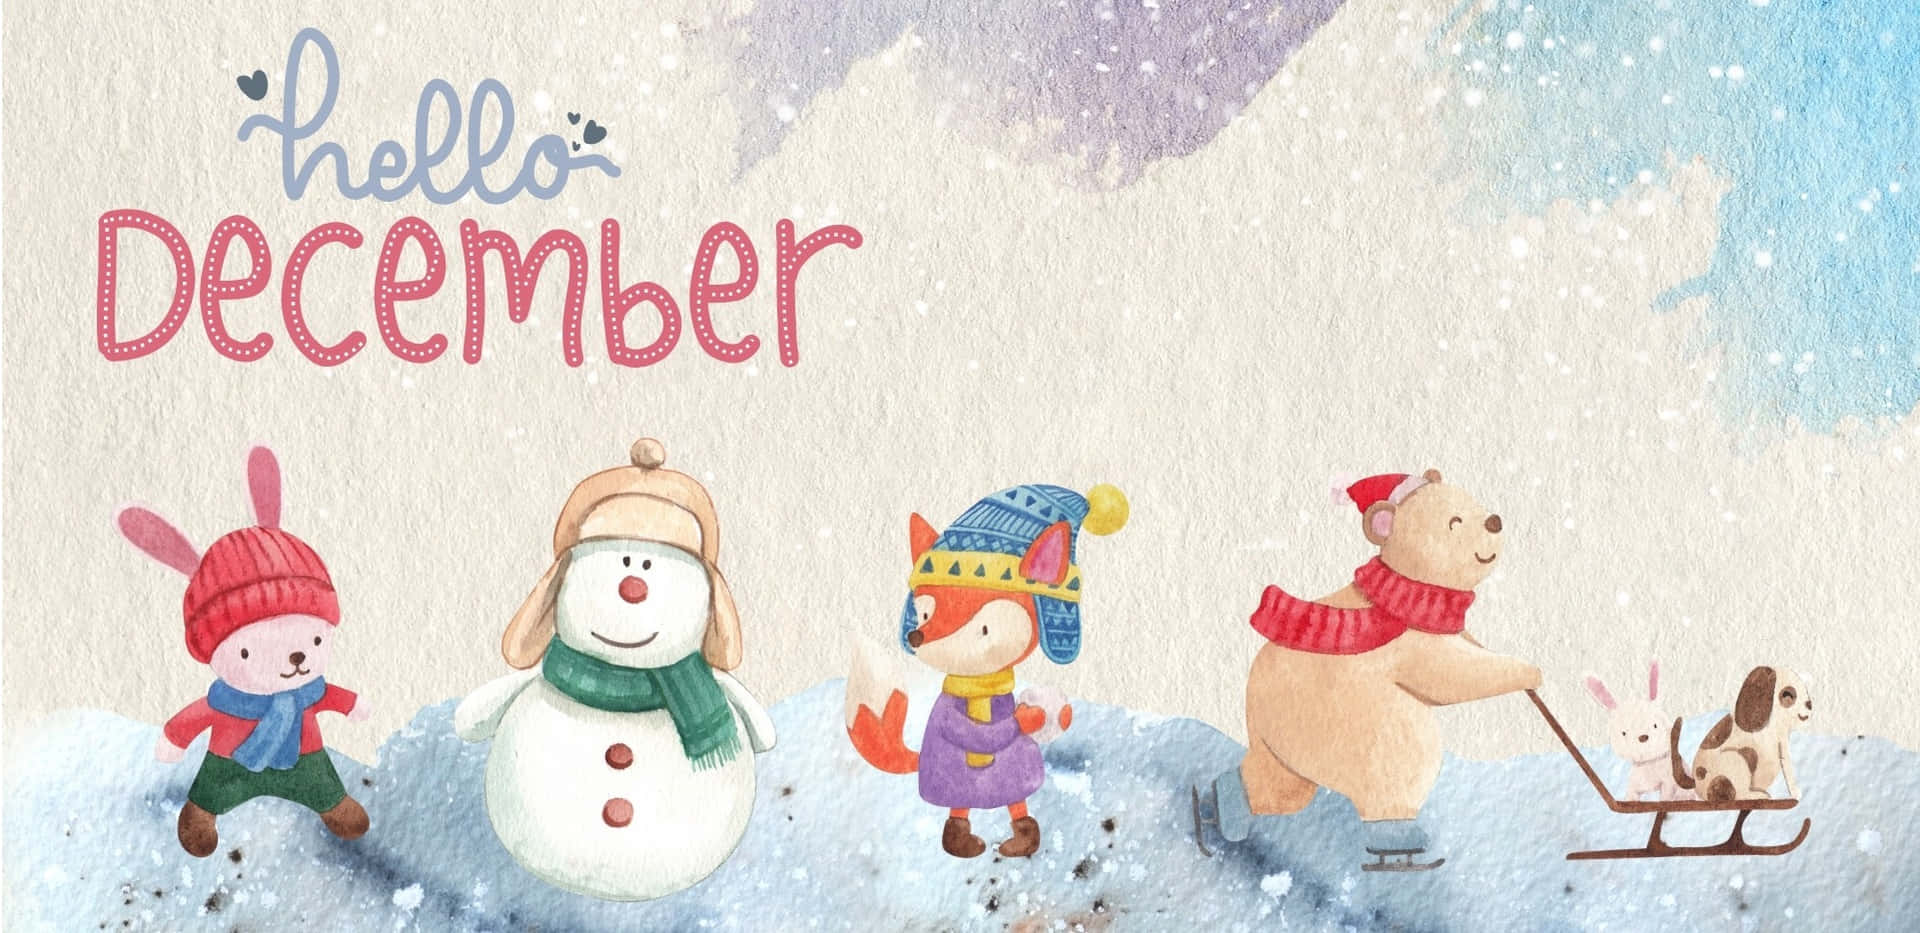 Hello December Winter Celebration Illustration Wallpaper